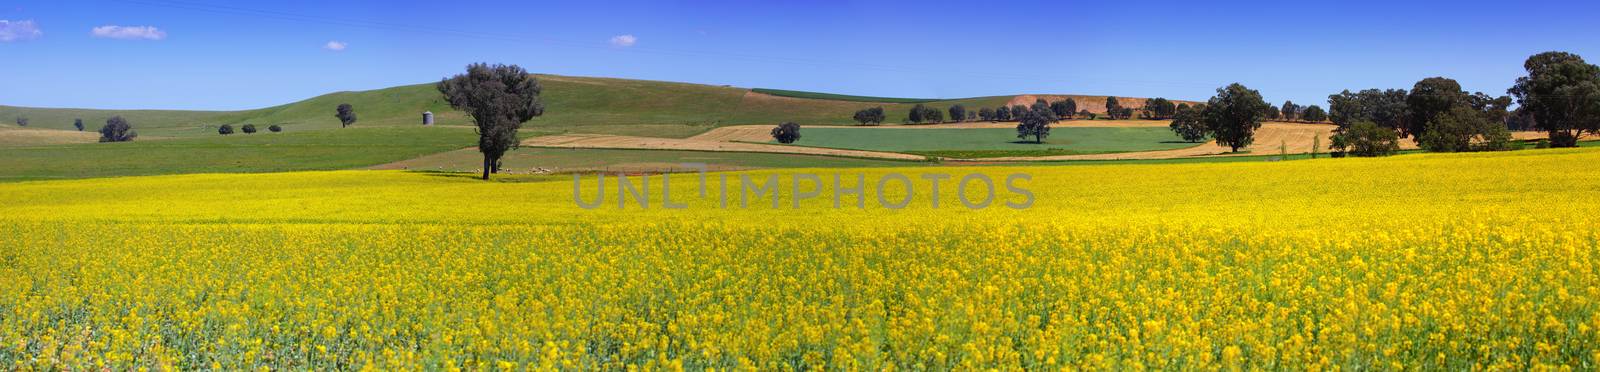 Country NSW farmland panorama by lovleah